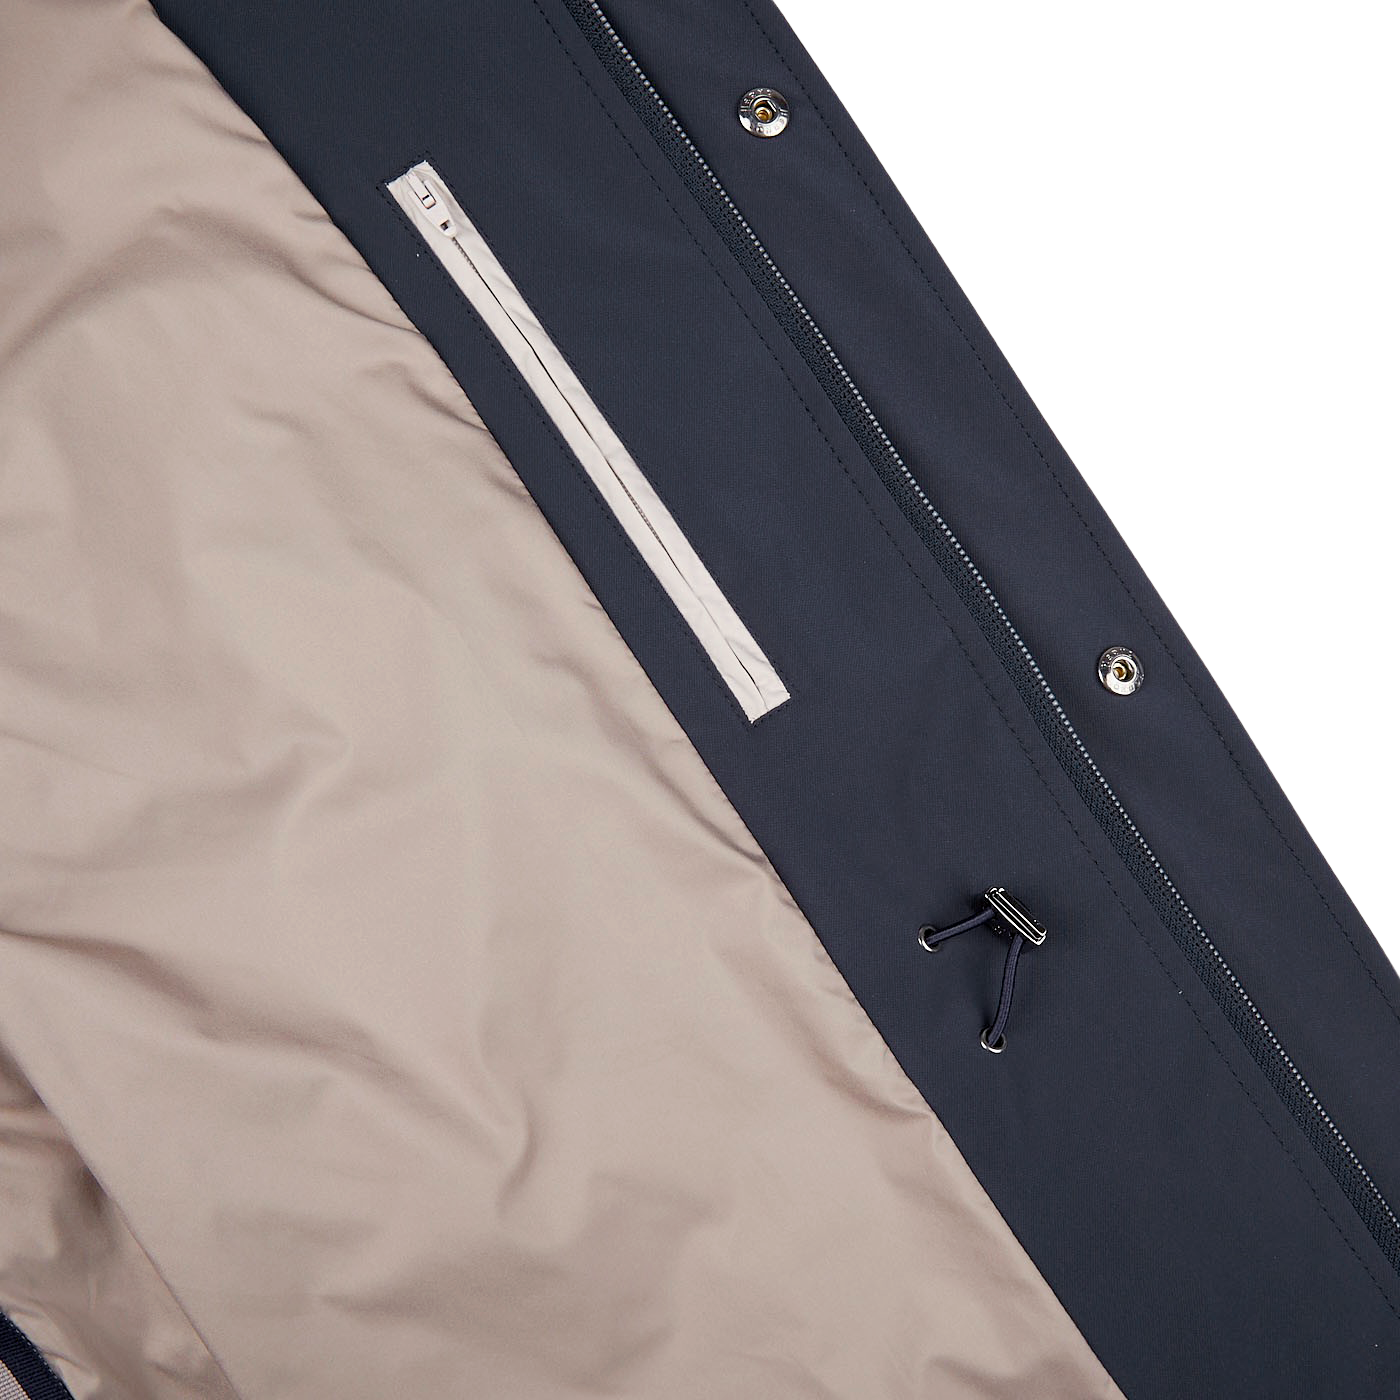 A Herno Navy Blue Nylon Hood Field Jacket with a zippered pocket.